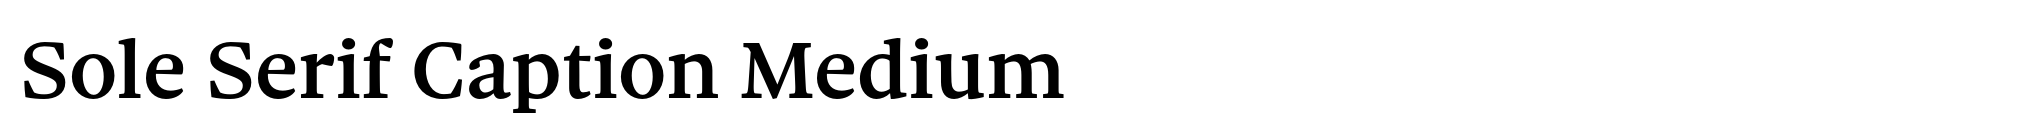 Sole Serif Caption Medium image